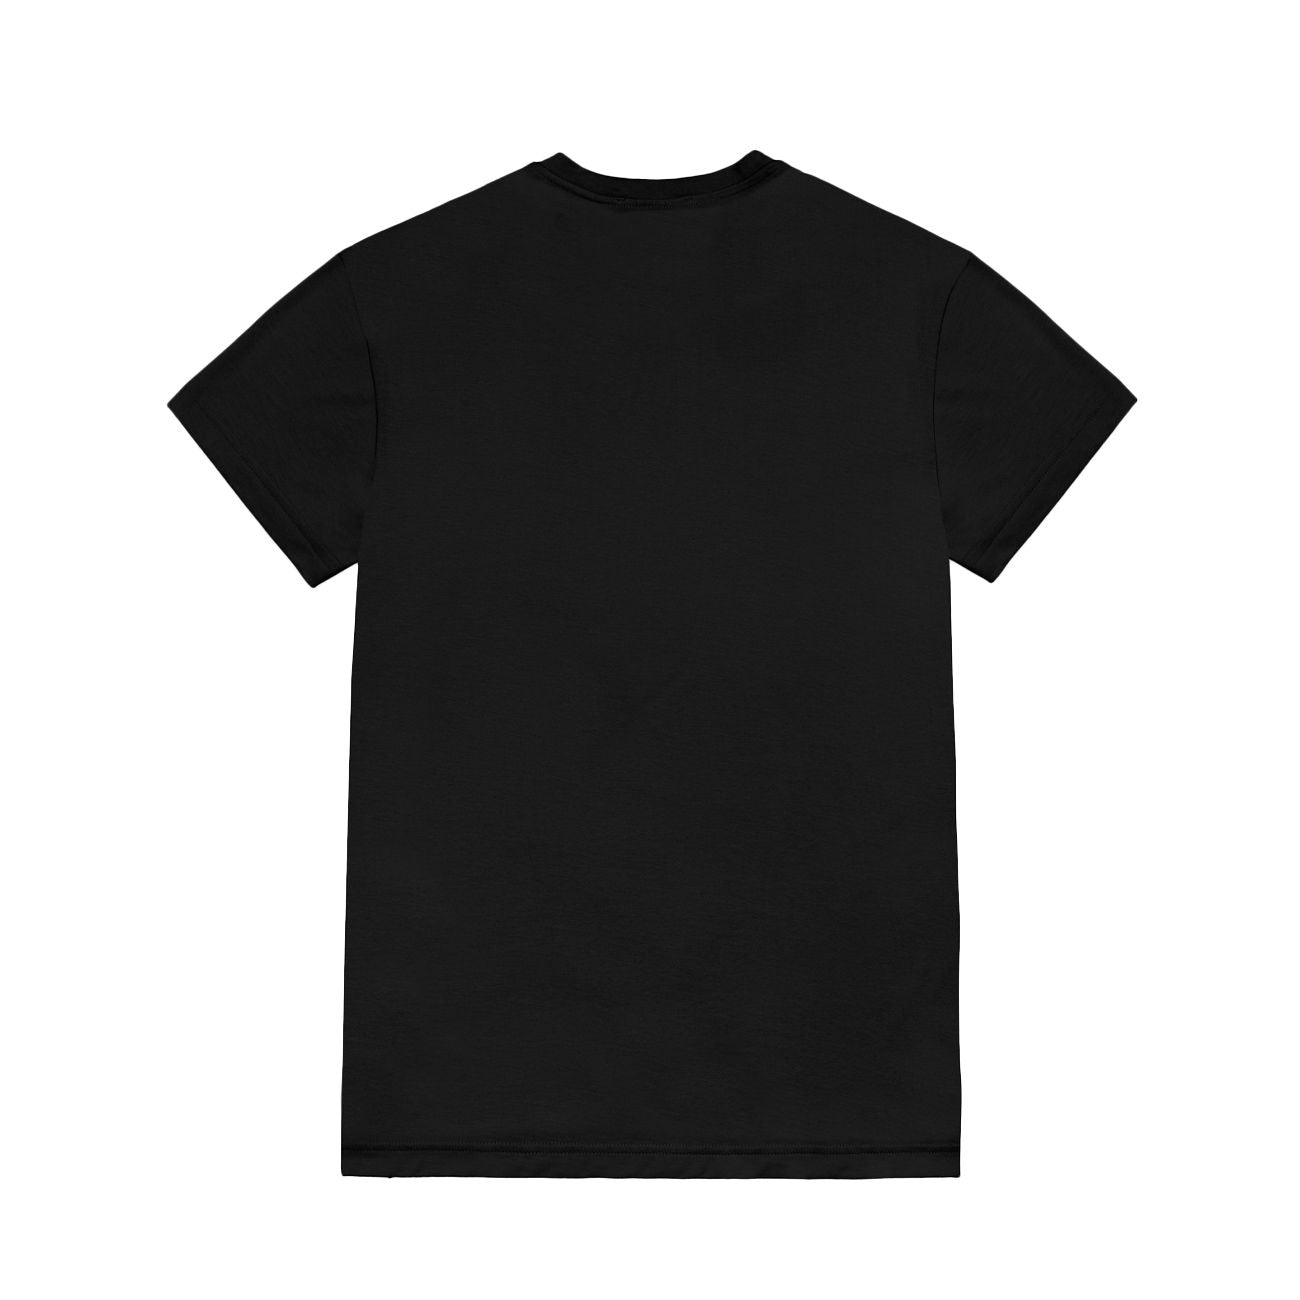 Colmar T-Shirt Uomo Monday-Nero